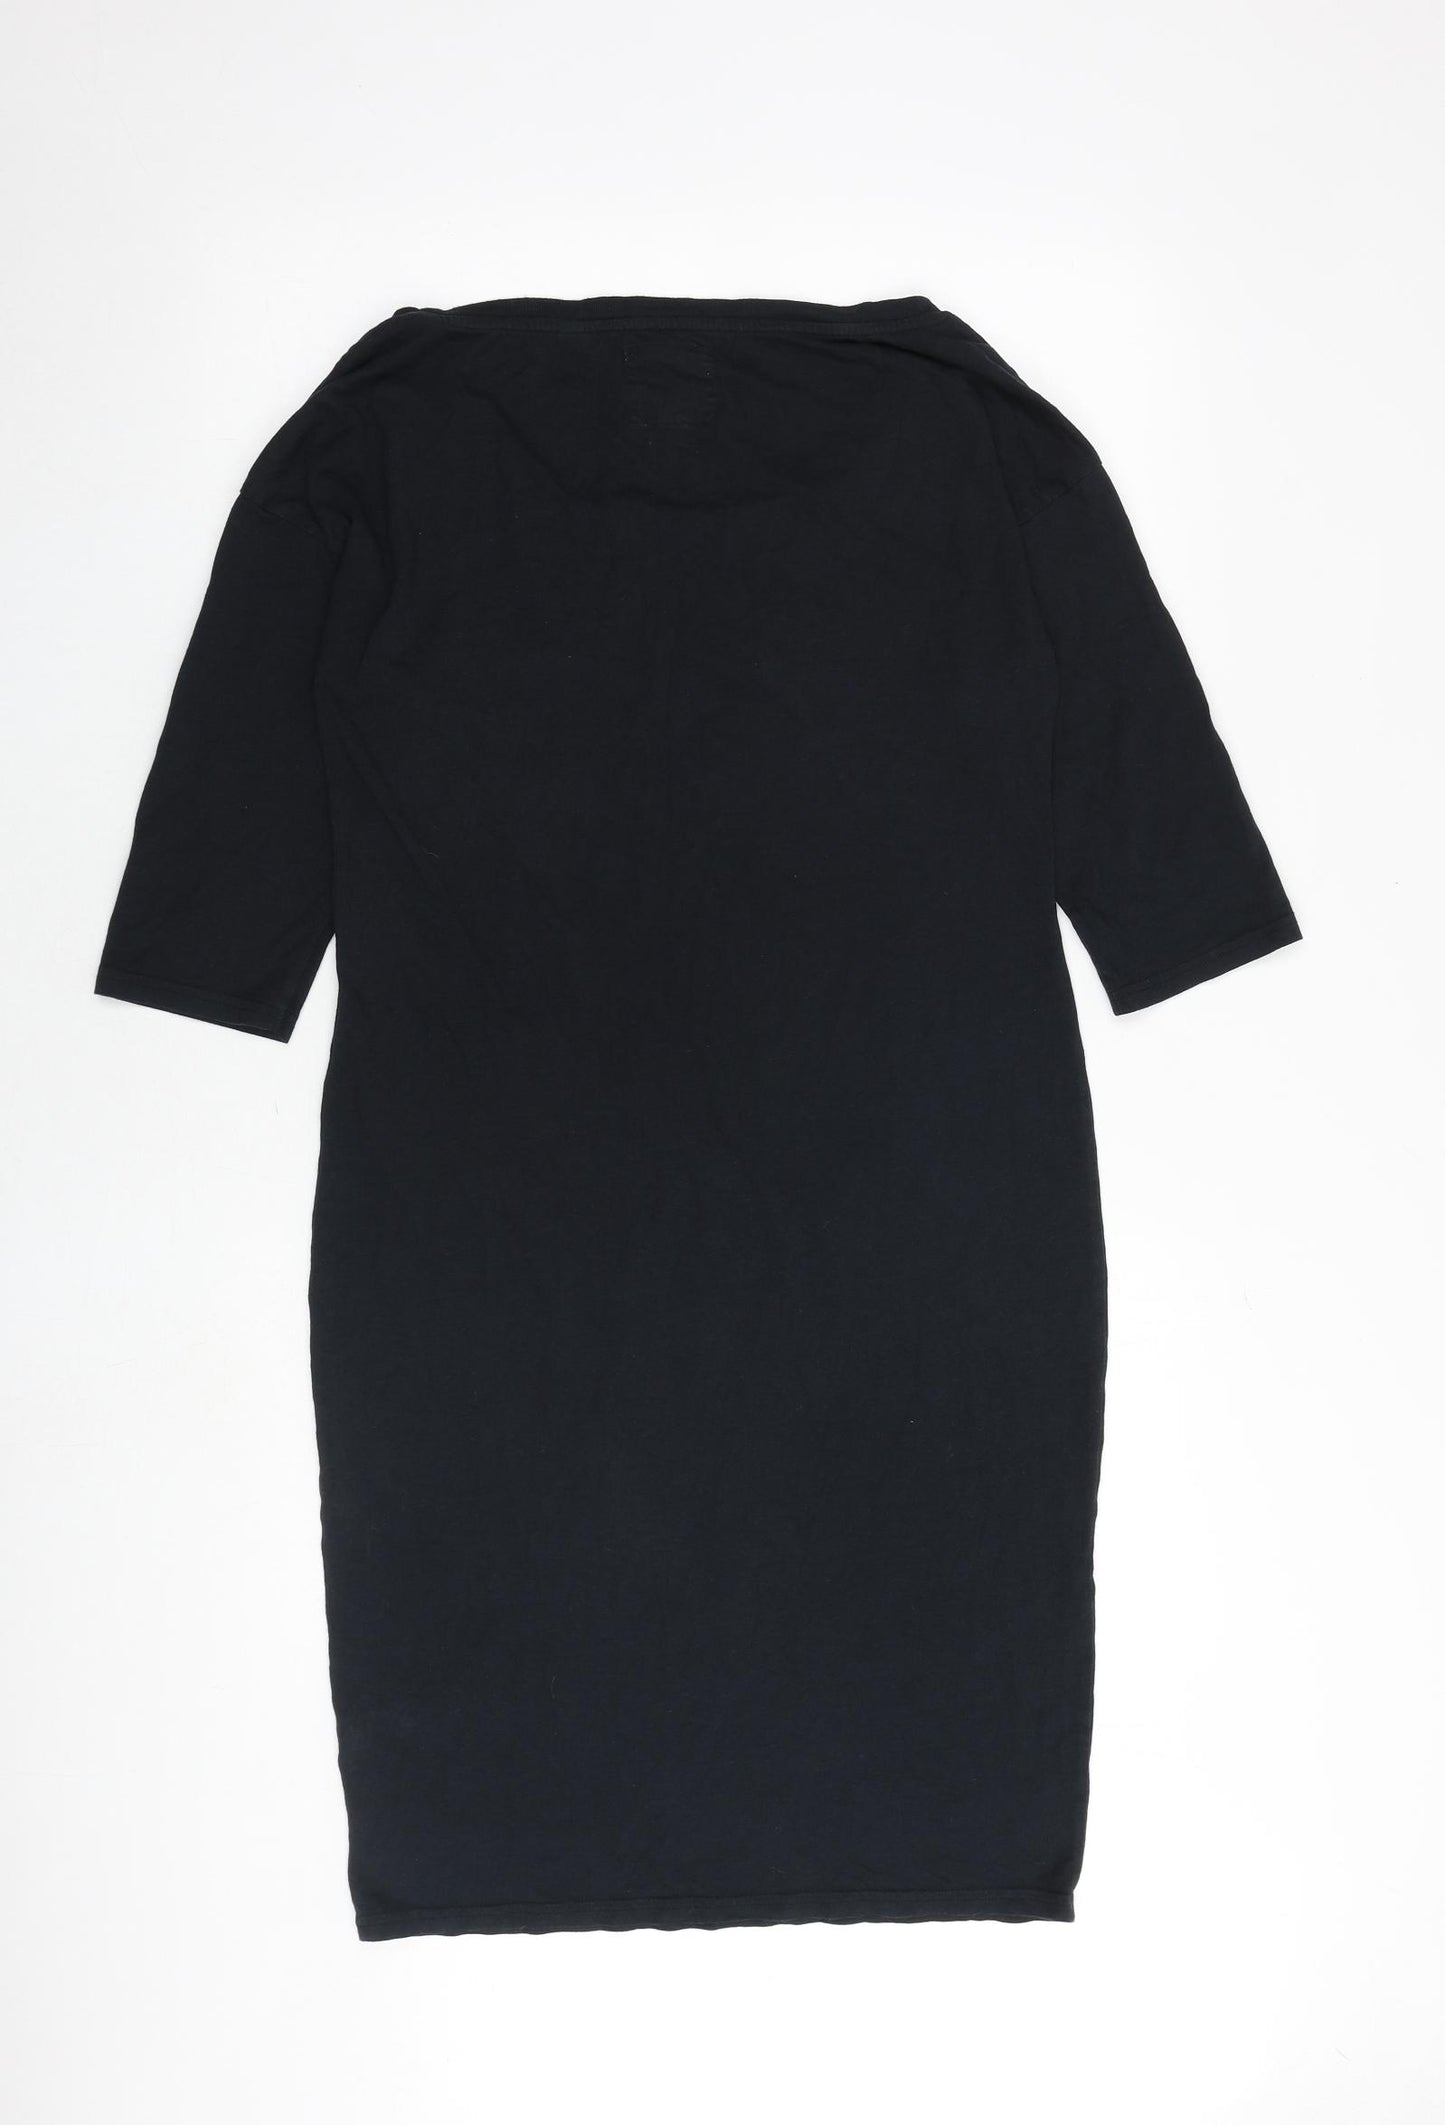 Jack Wills Womens Black Cotton Shift Size 10 Round Neck Pullover